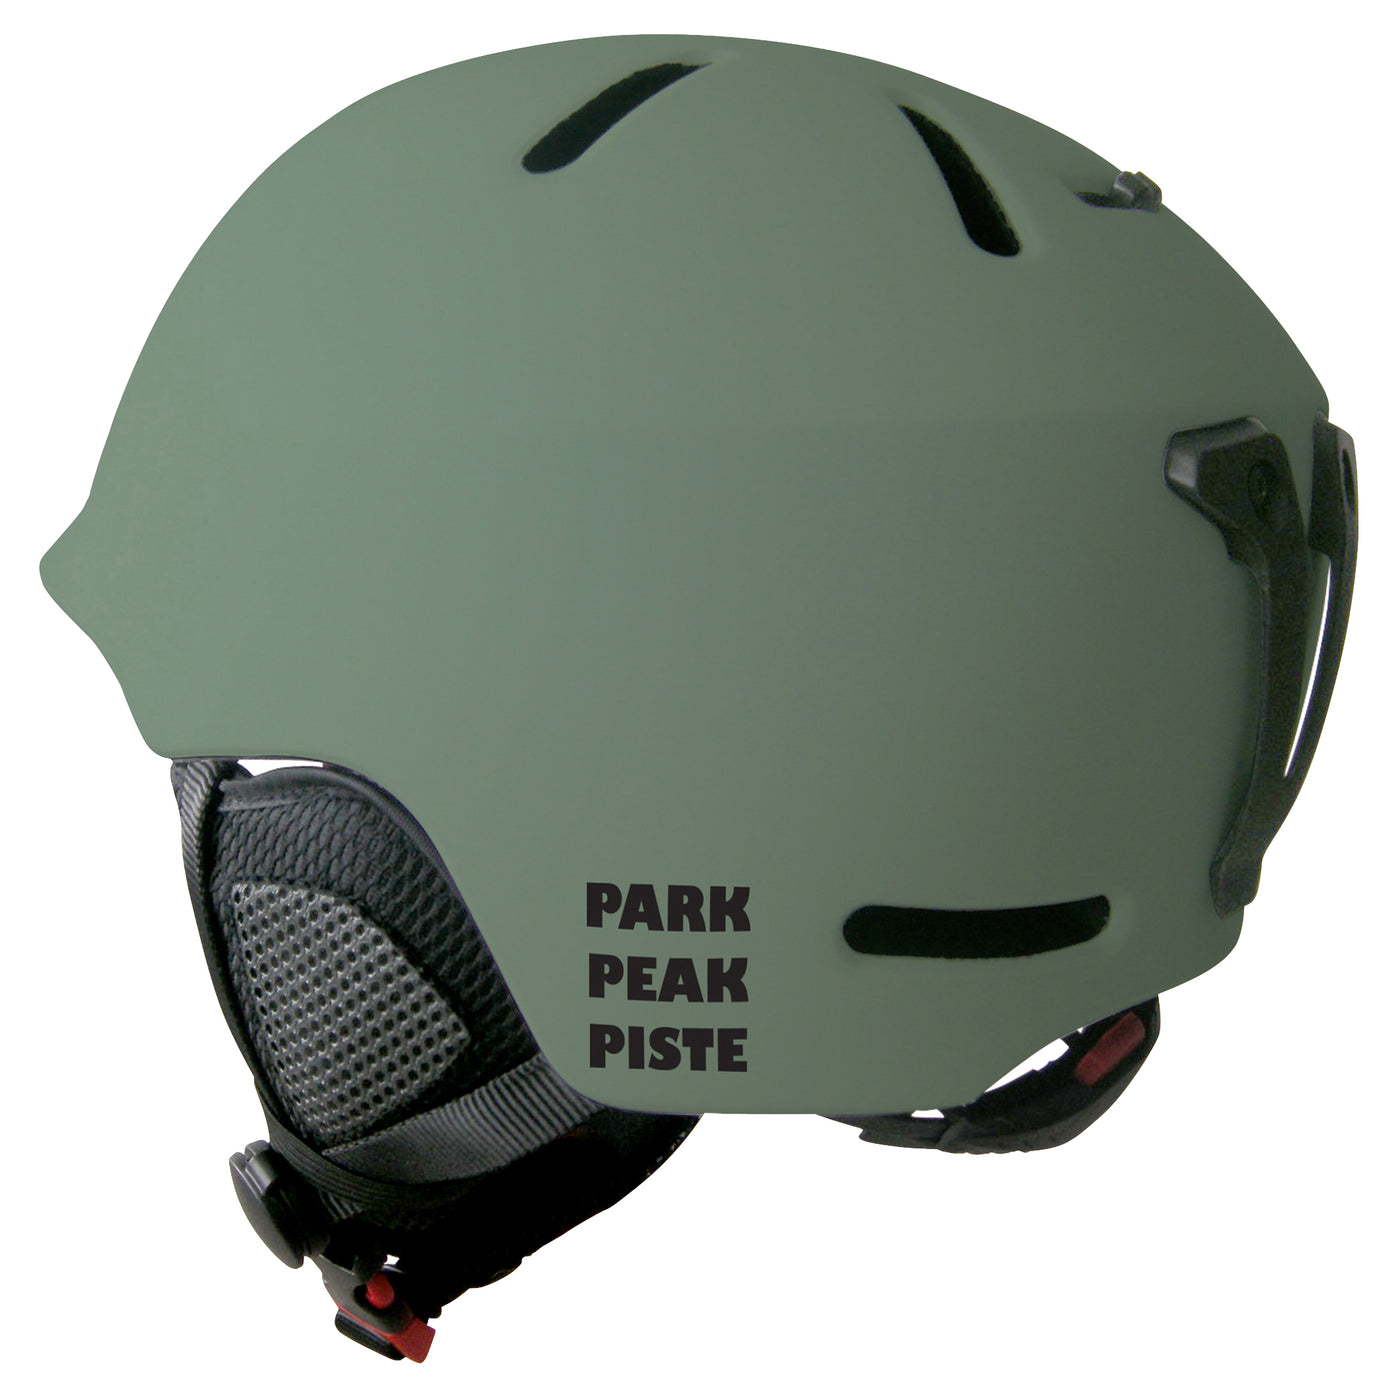 Park Peak Piste - The Commander Helmet Sage Matt - DISCONTINUED